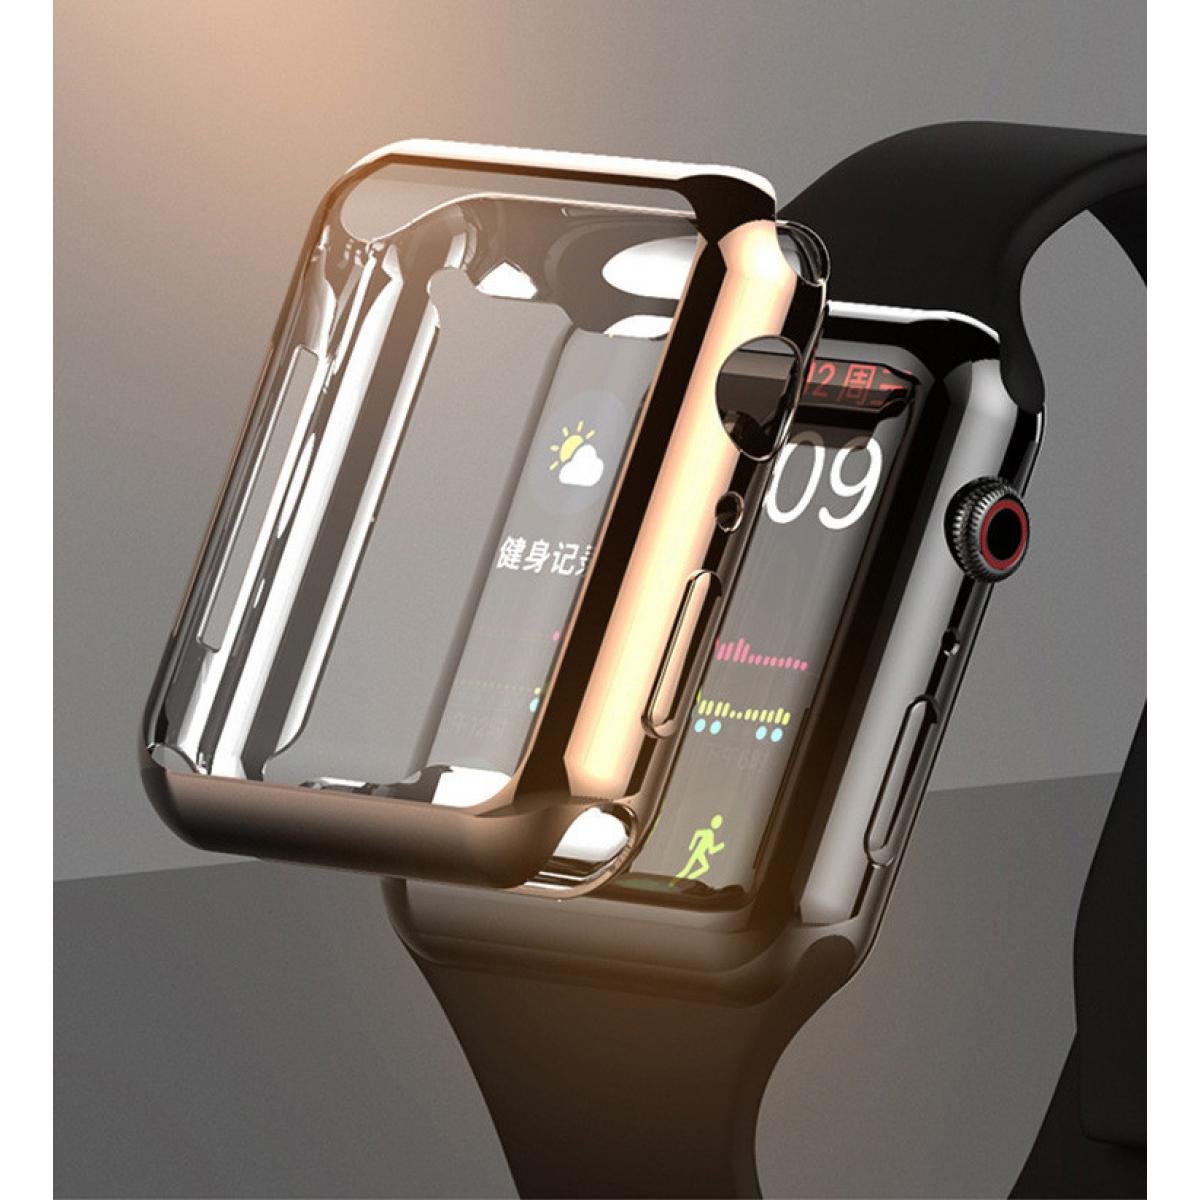 Shot - Coque Silicone 44mm pour IWATCH Serie 4 APPLE Bumper Protection Tactile (OR) - Accessoires montres connectées